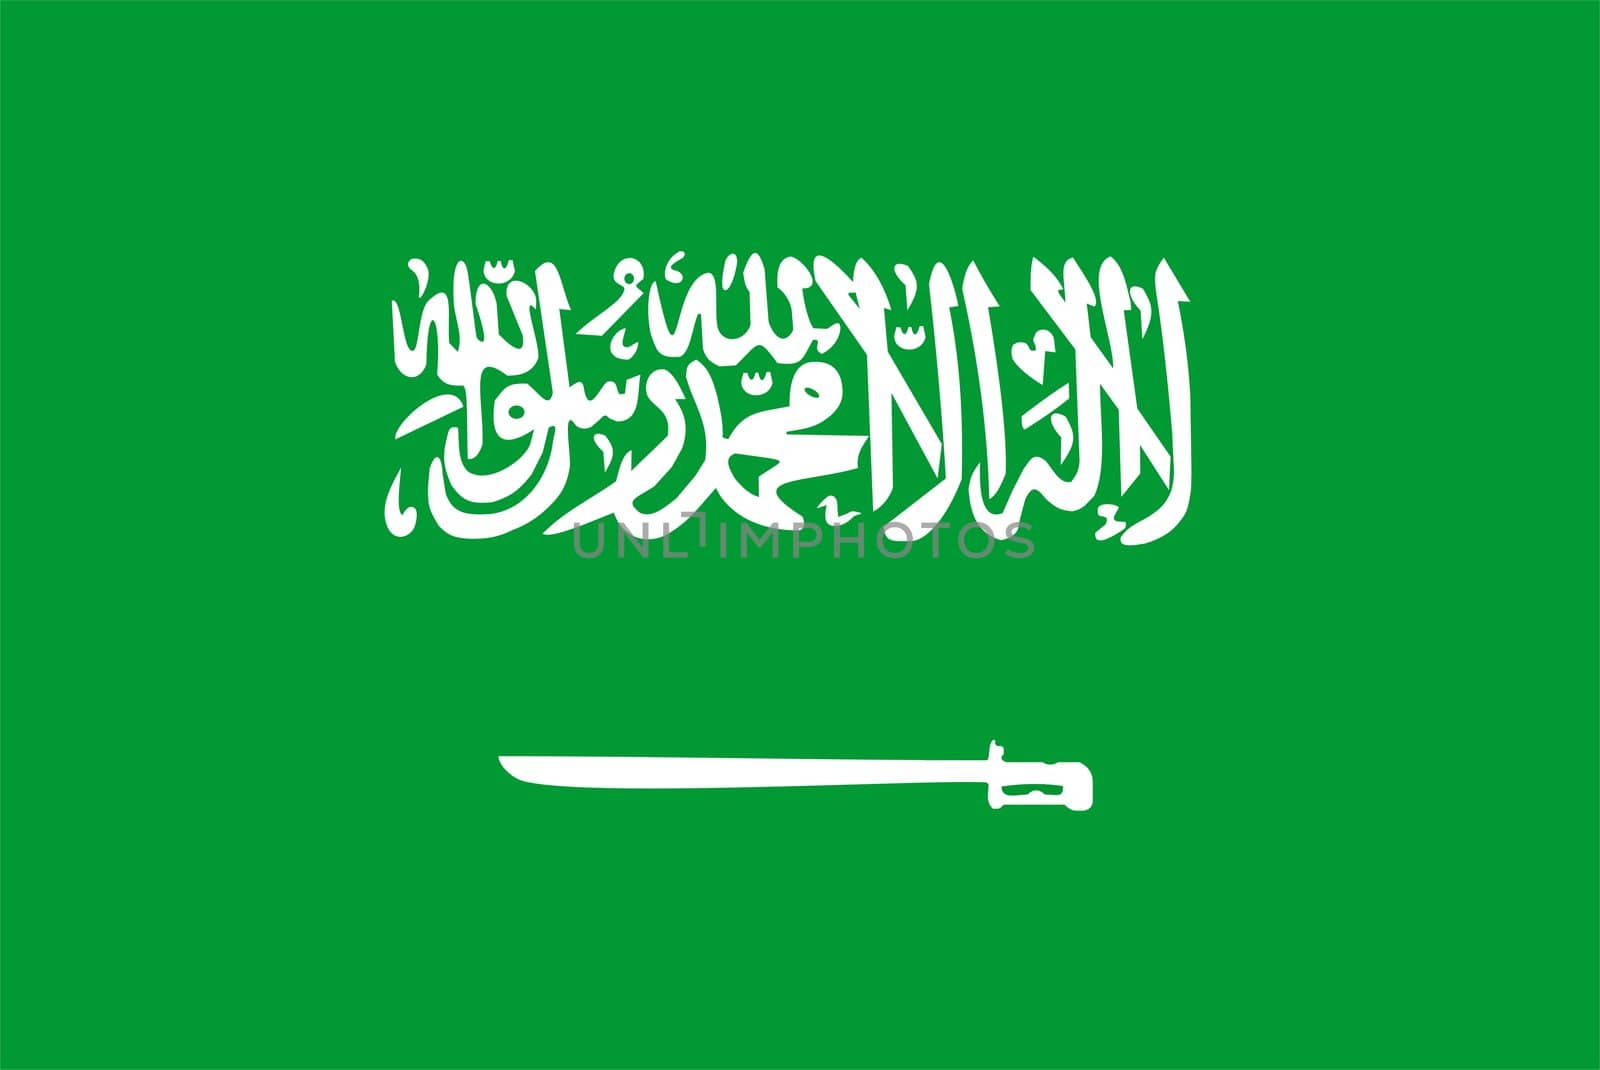 2D illustration of the flag of Saudi Arabia